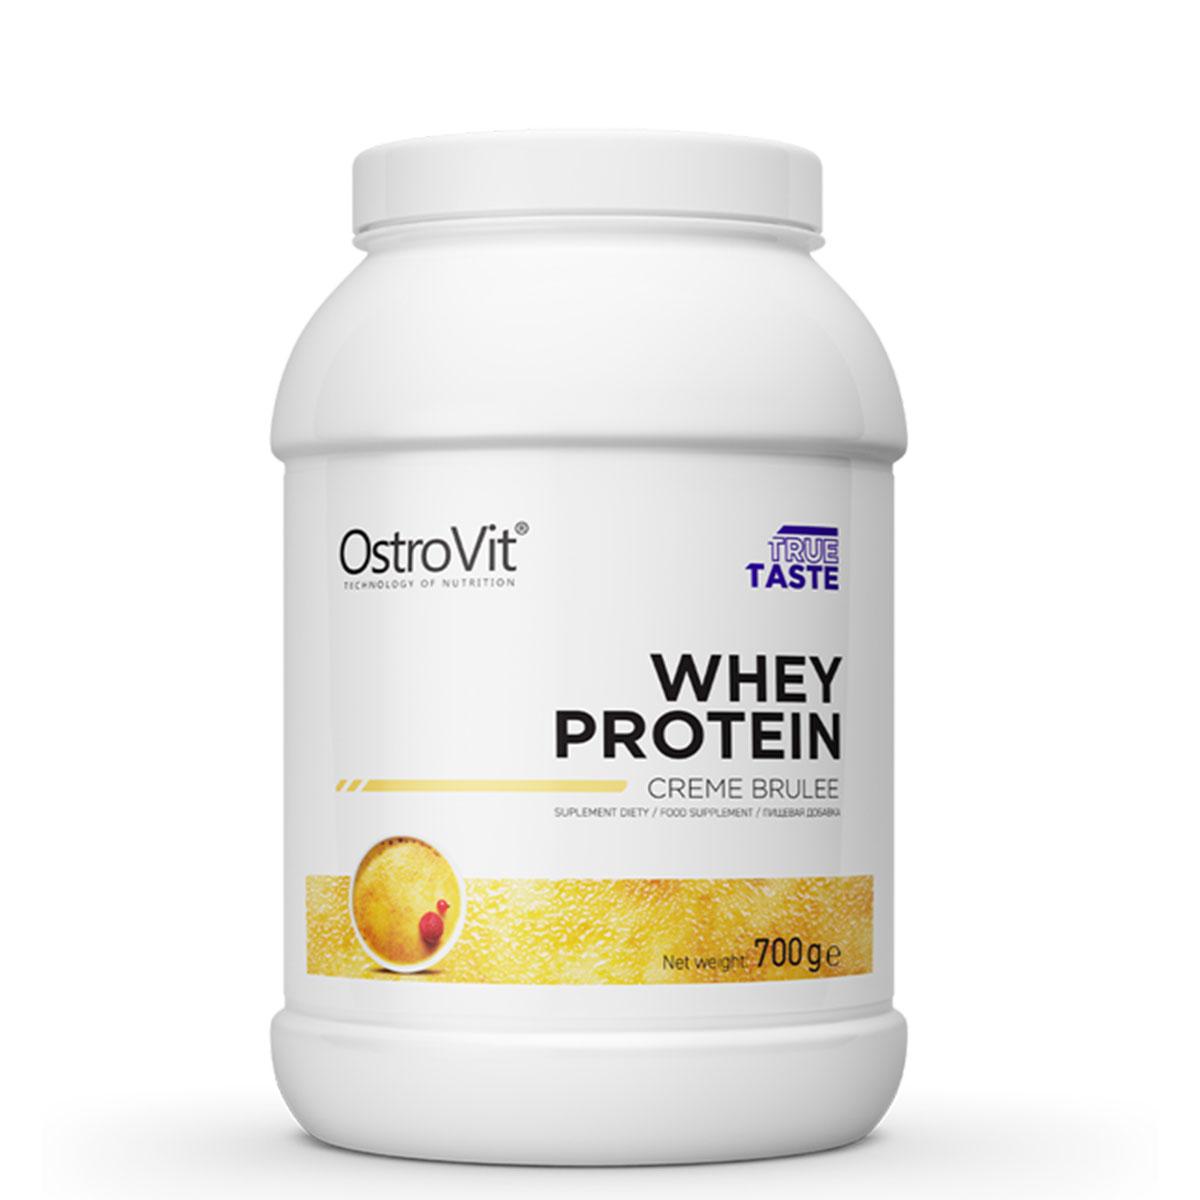 OSTRO VIT Whey protein Cream brule 700g